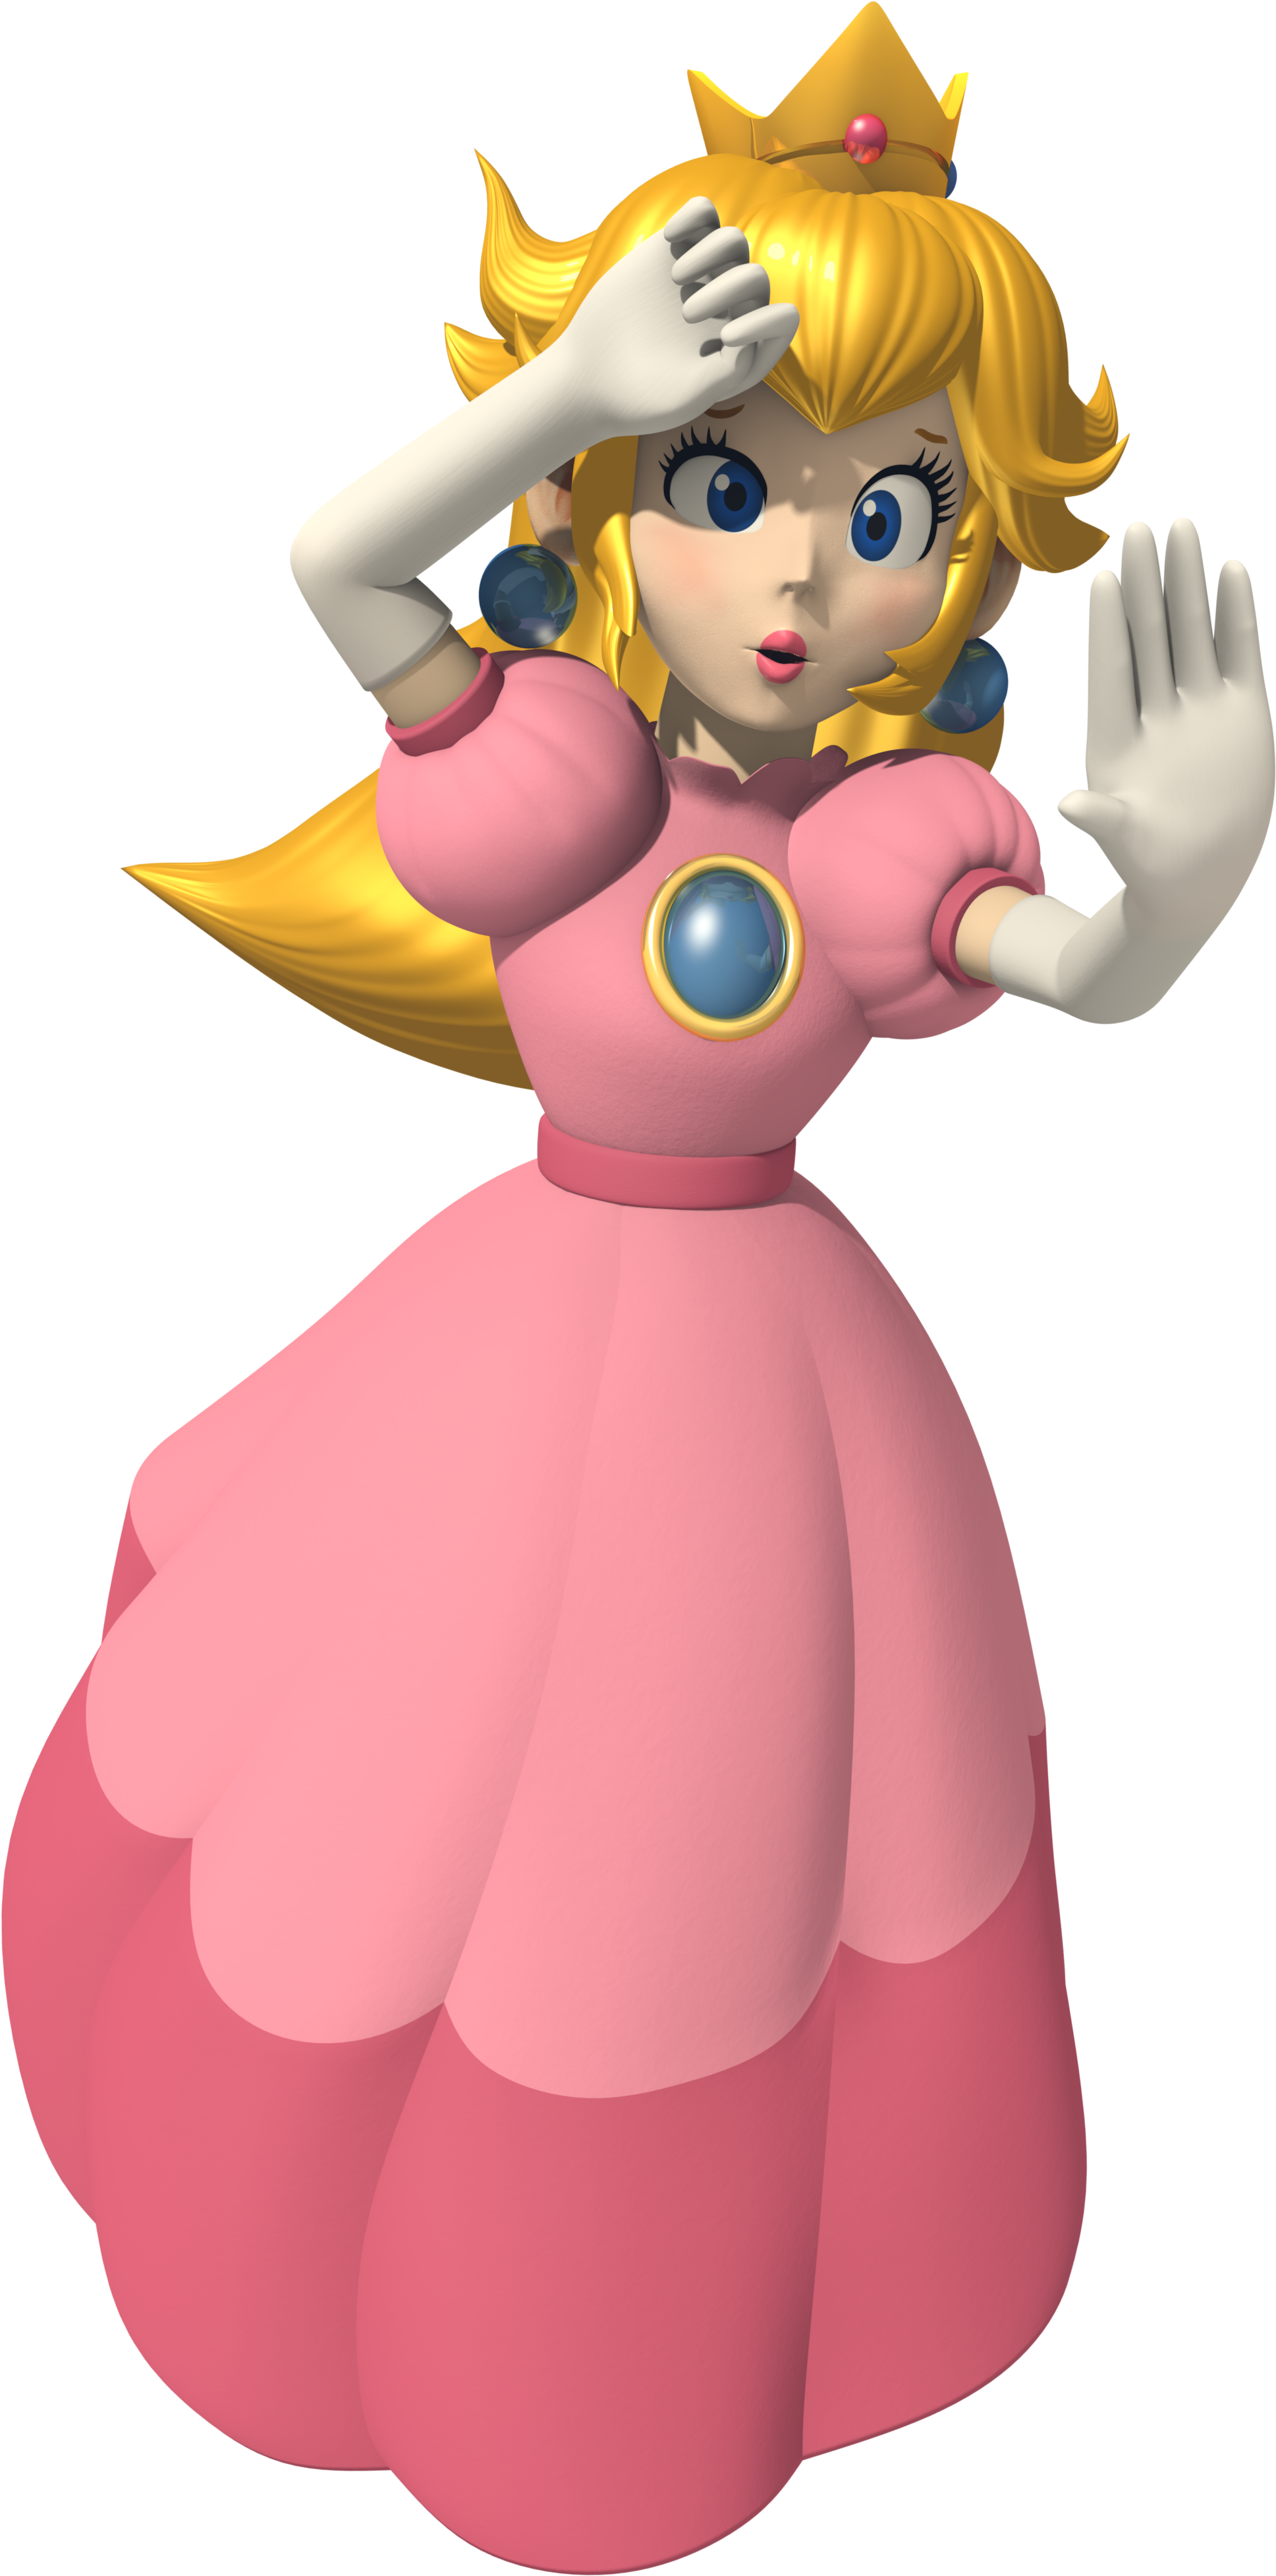 Princess Peach Wind Storm By Vinfreild - Princess Peach Classic Dress (2000x4000)